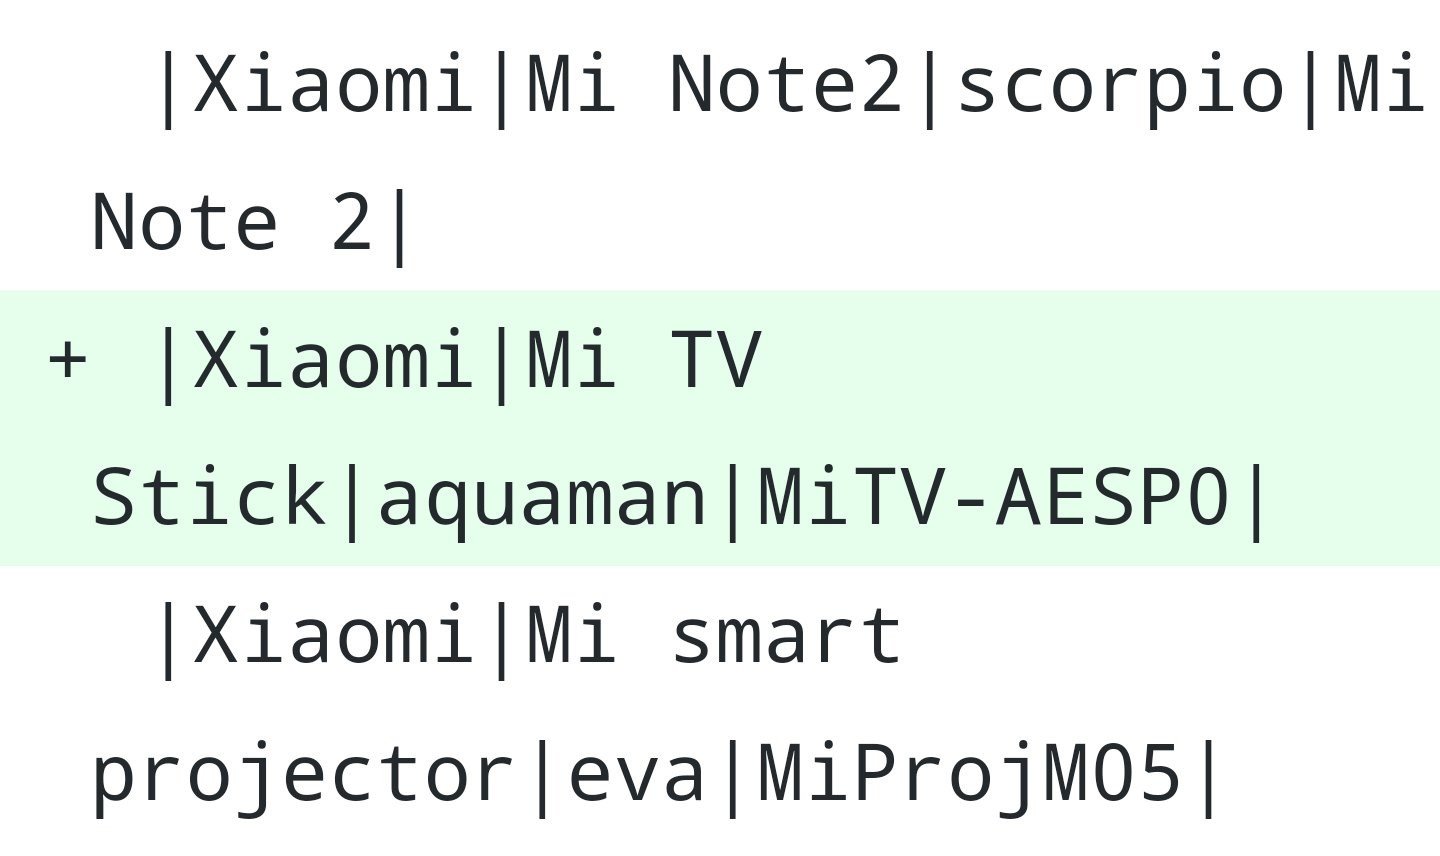 Mi TV Stick aquaman benchmark exposure: 1080P/4K with Google certification 